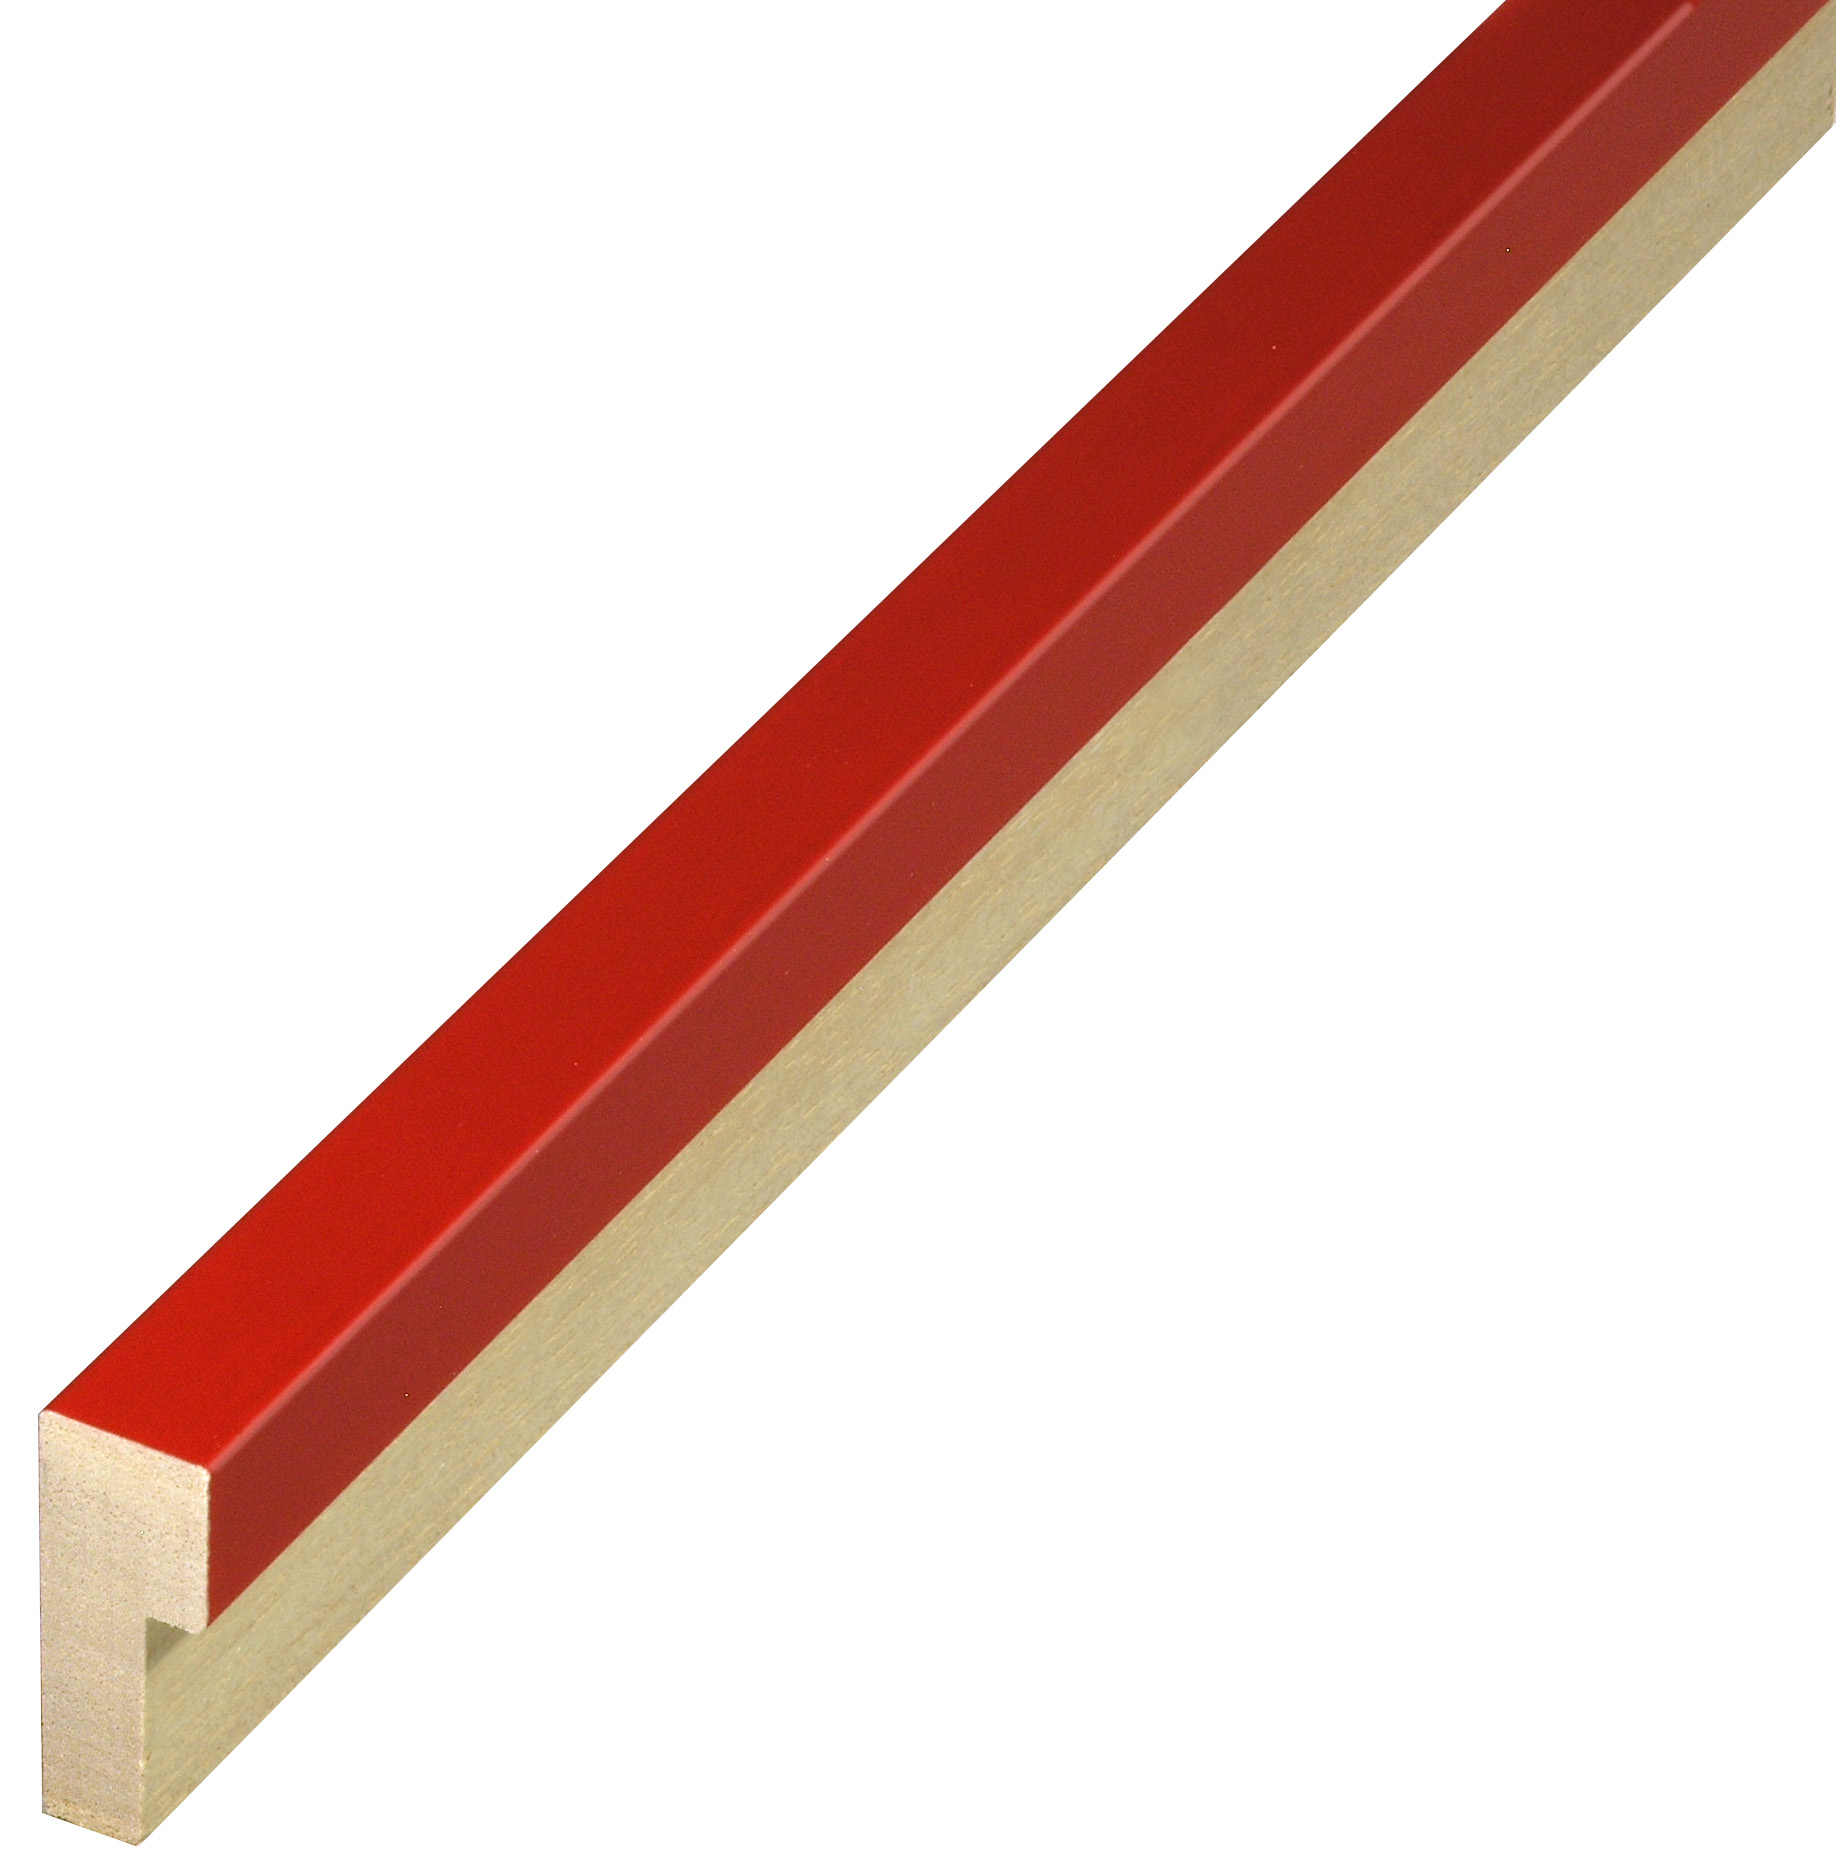 Profil ayous lățime 15 mm înălțime 40 mm - Roșu